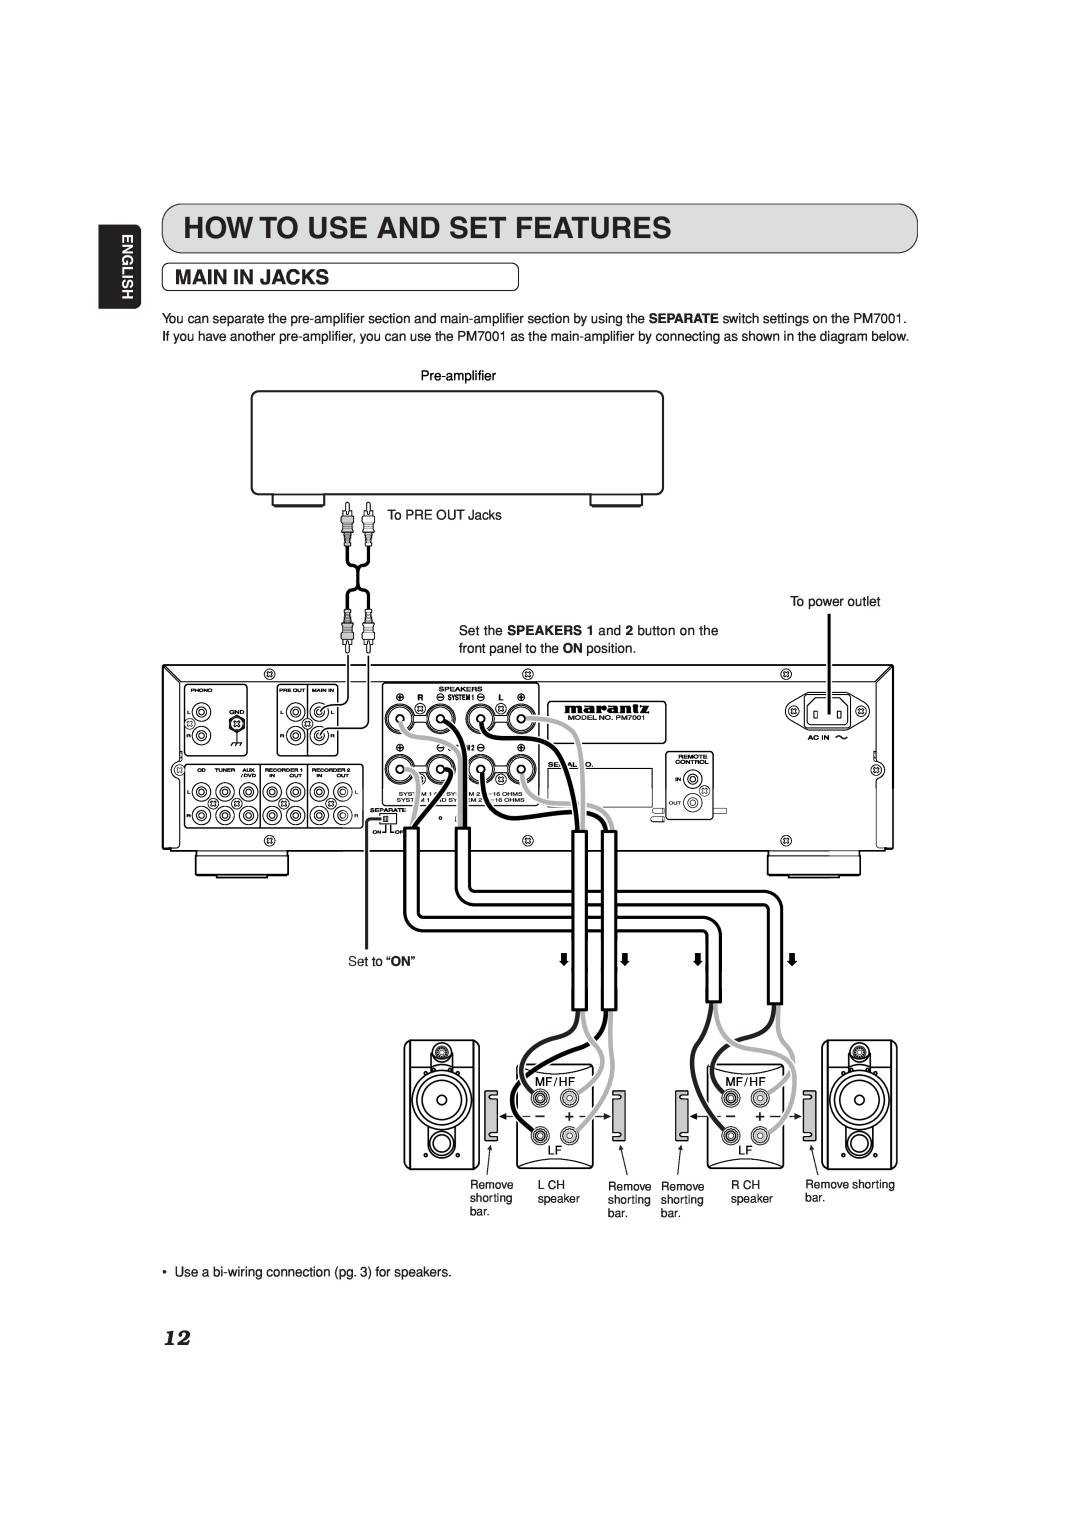 Marantz PM7001KI manual How To Use And Set Features, Main In Jacks, English 